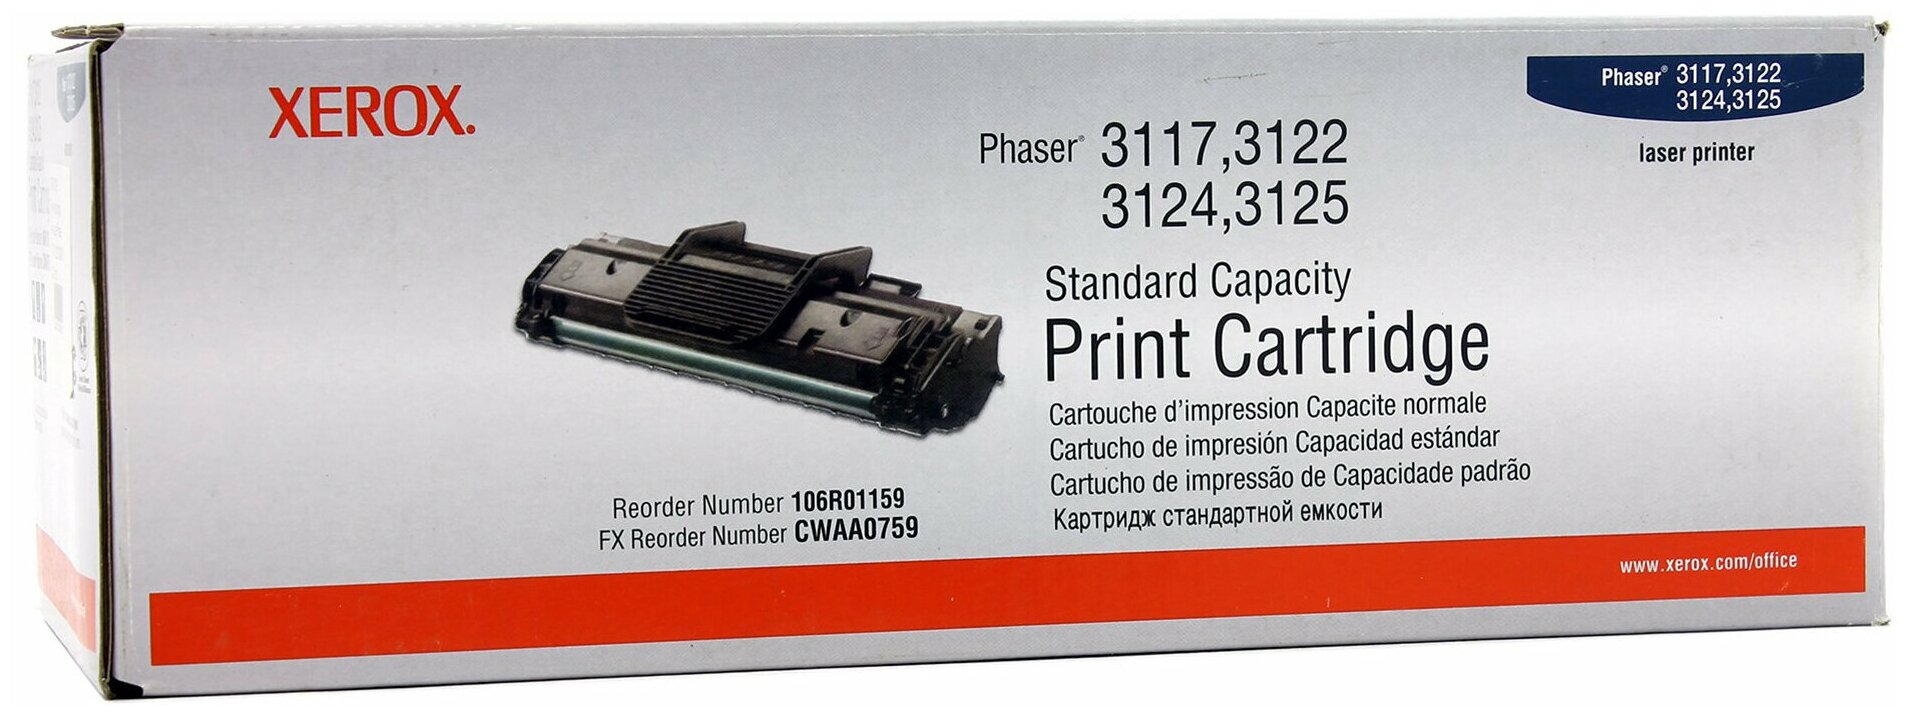 Картридж Xerox Phaser 3122/3117/3124, 3К, черный